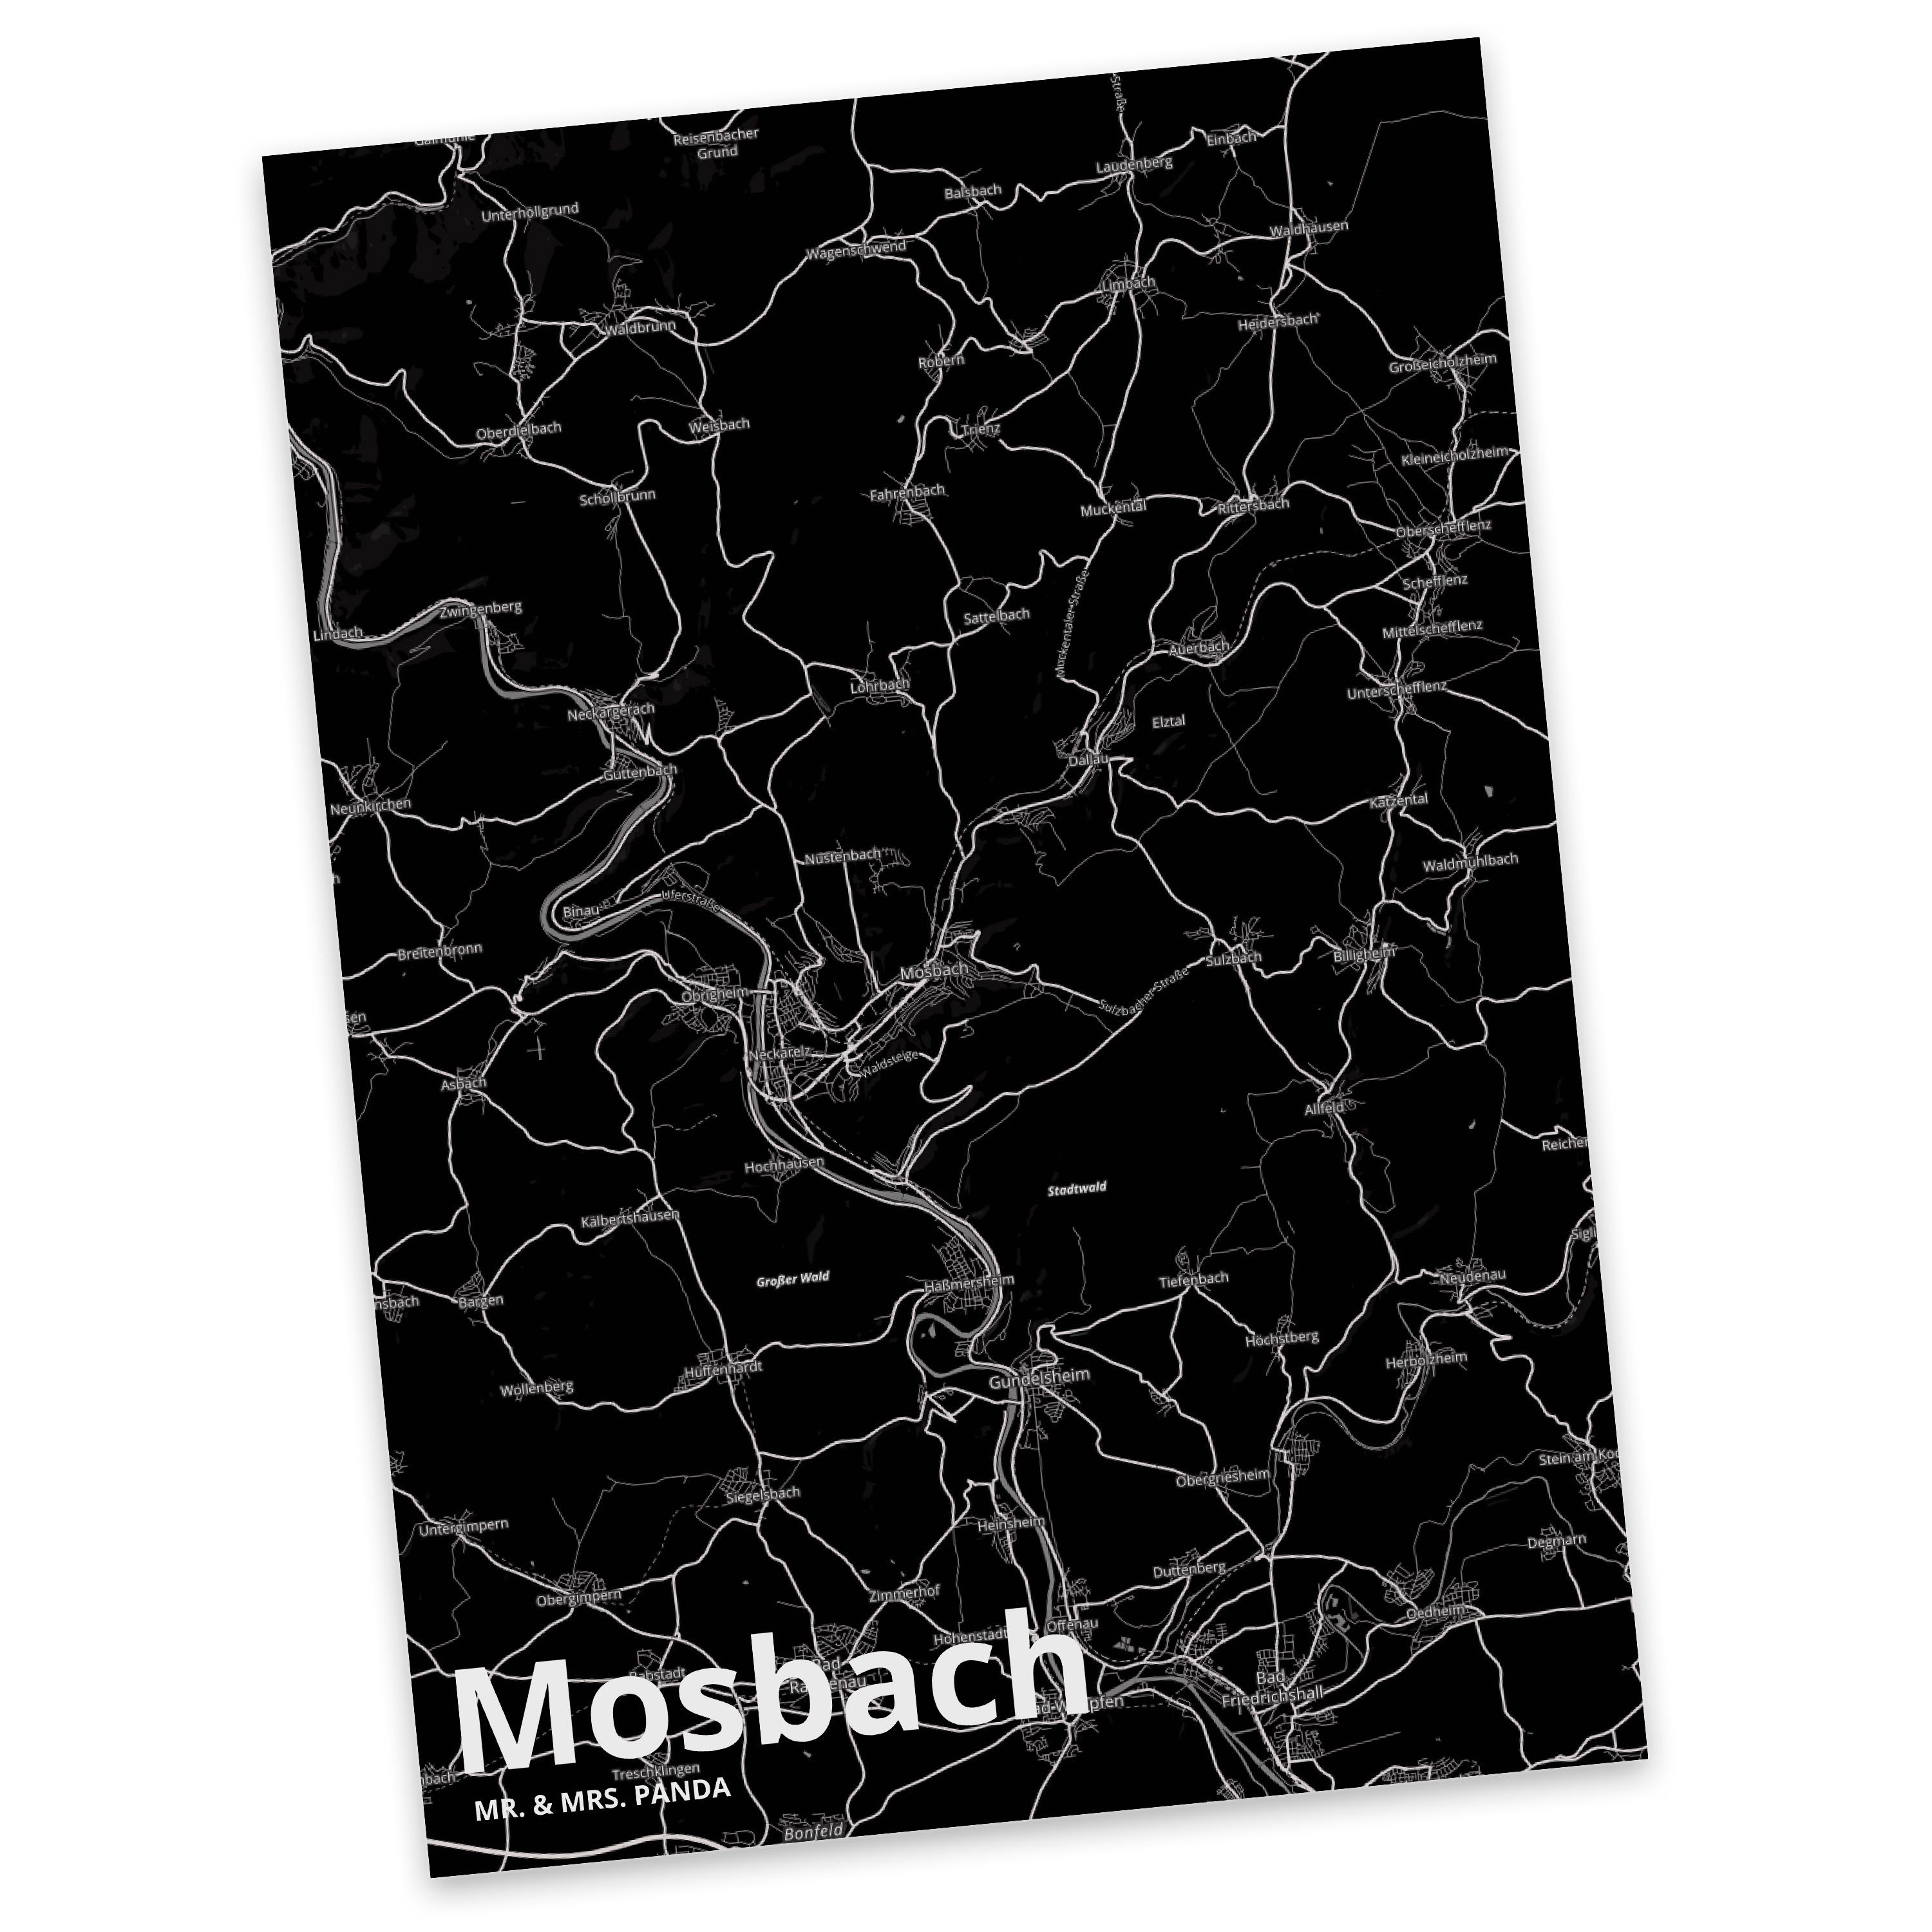 Mr. & Mrs. Panda Postkarte Mosbach - Geschenk, Stadt, Karte, Grußkarte, Geschenkkarte, Ort, Stad